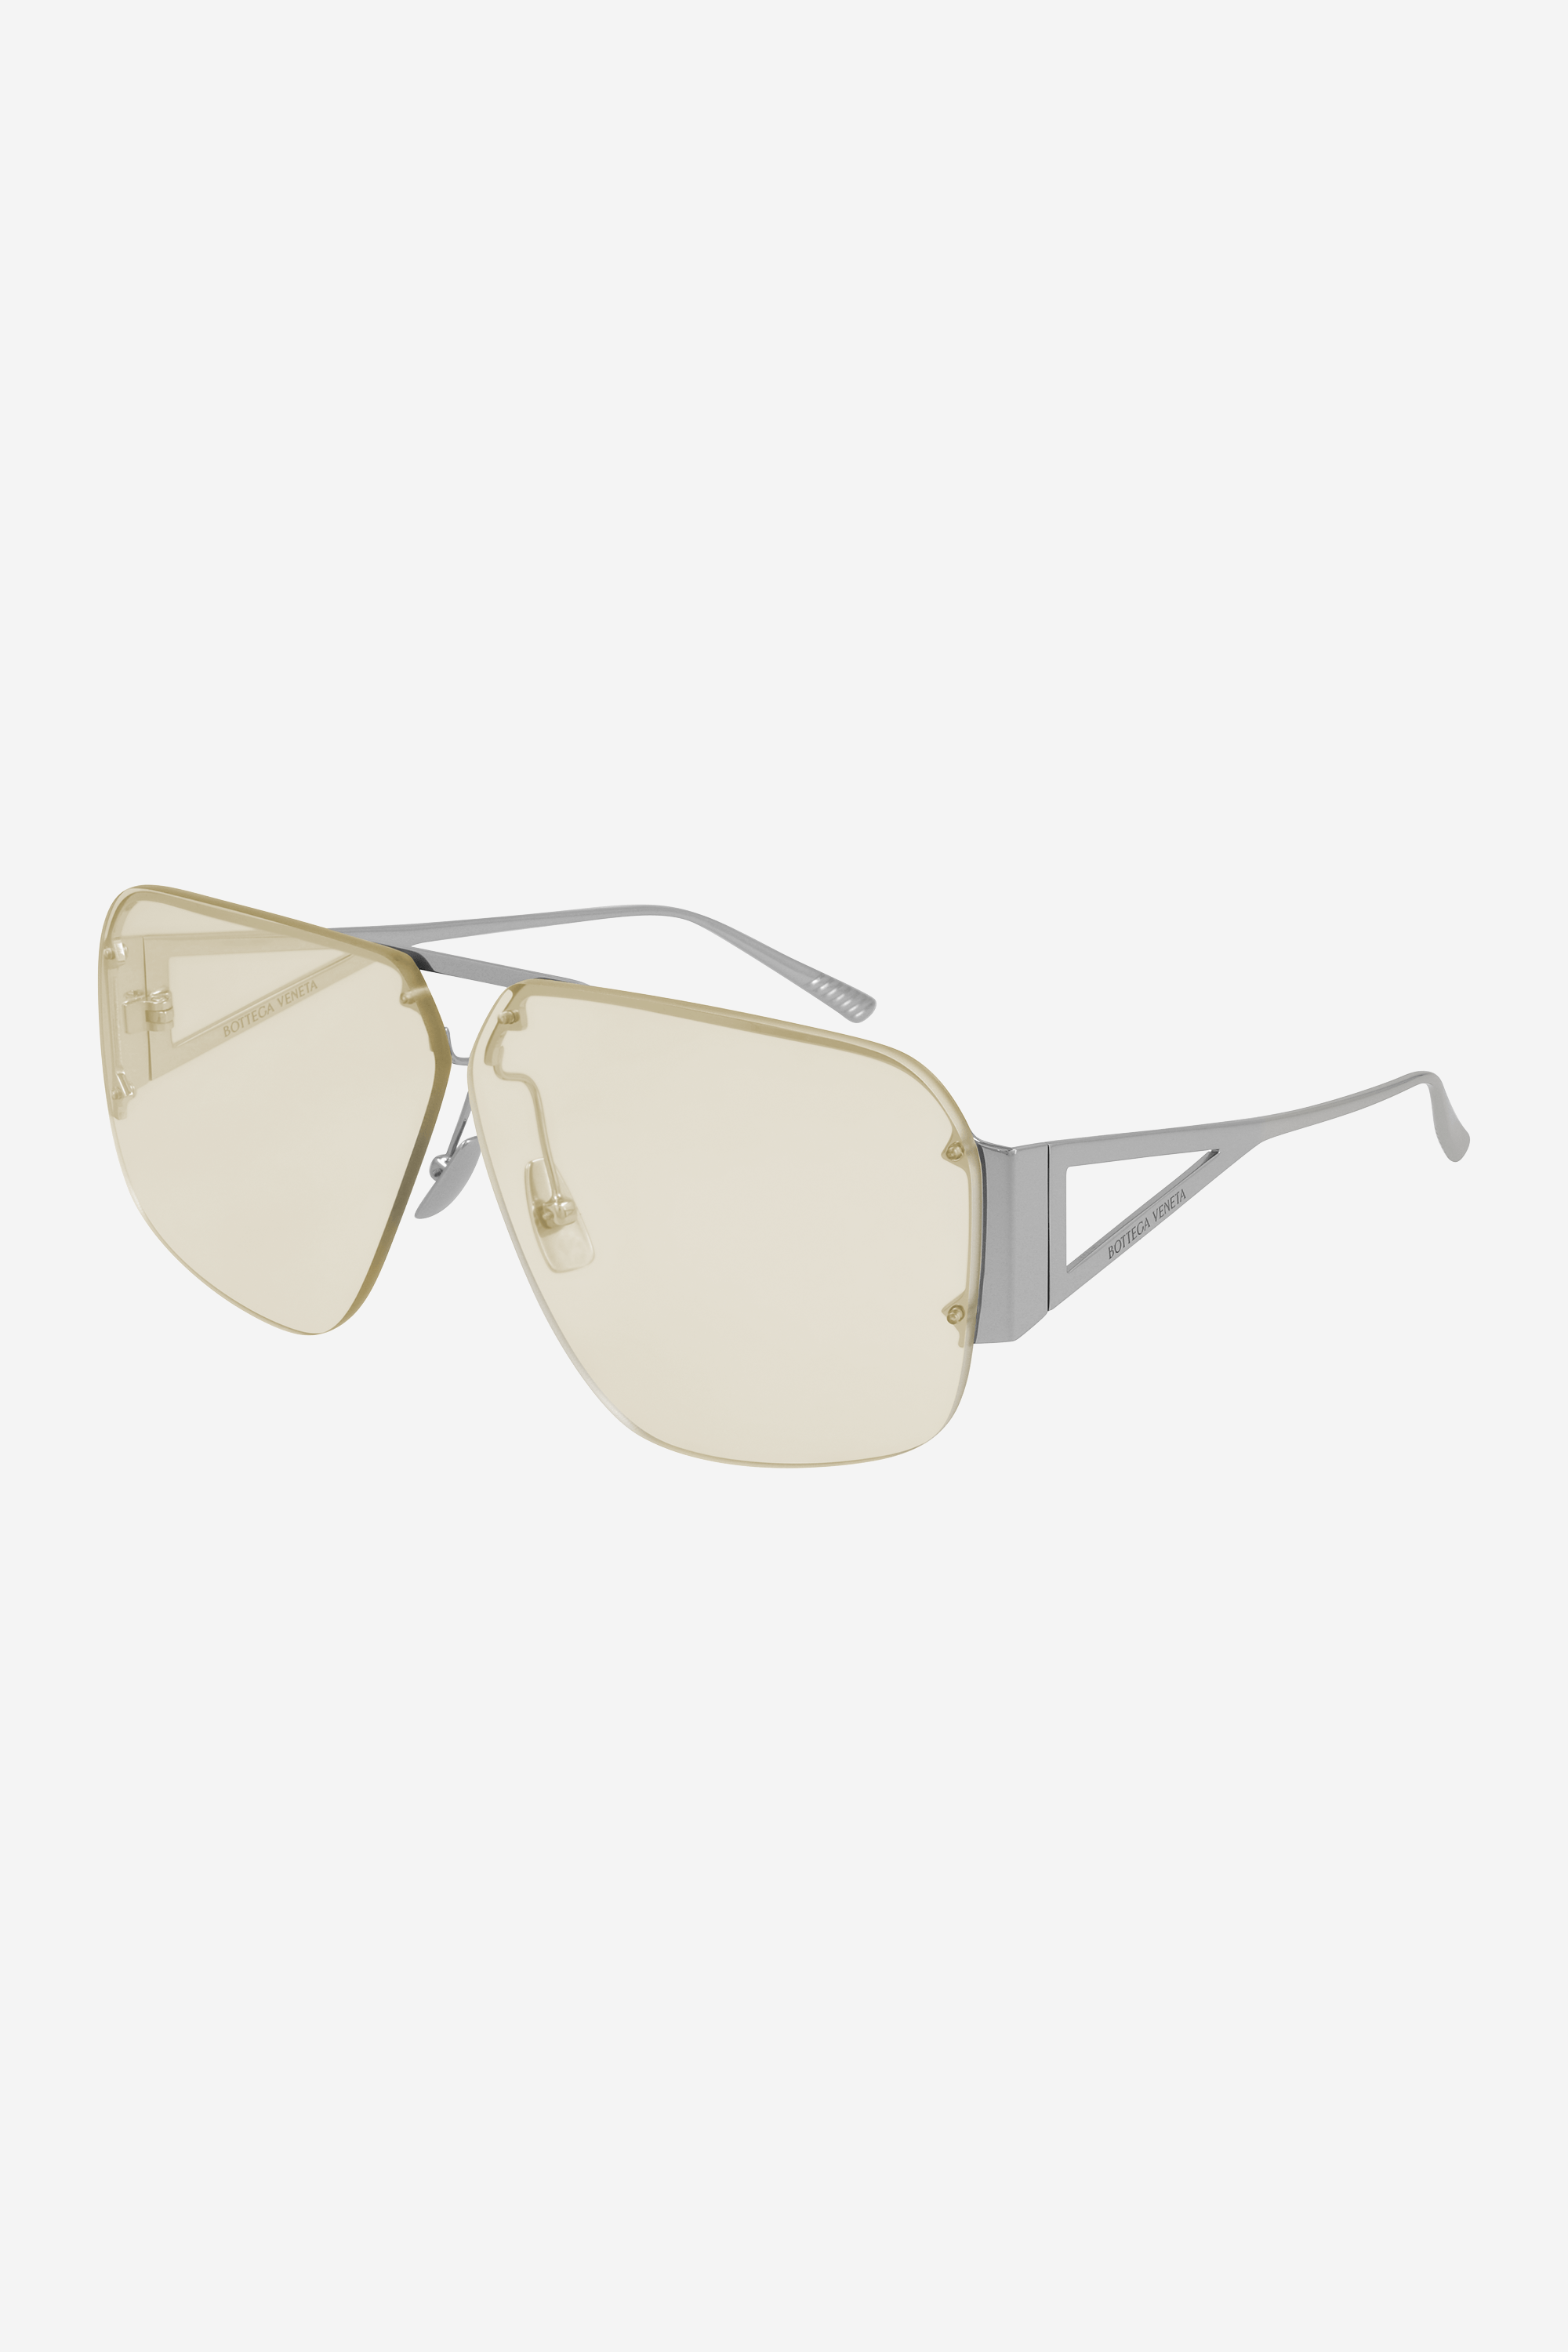 Bottega Veneta geometric caravan silver shades - Eyewear Club